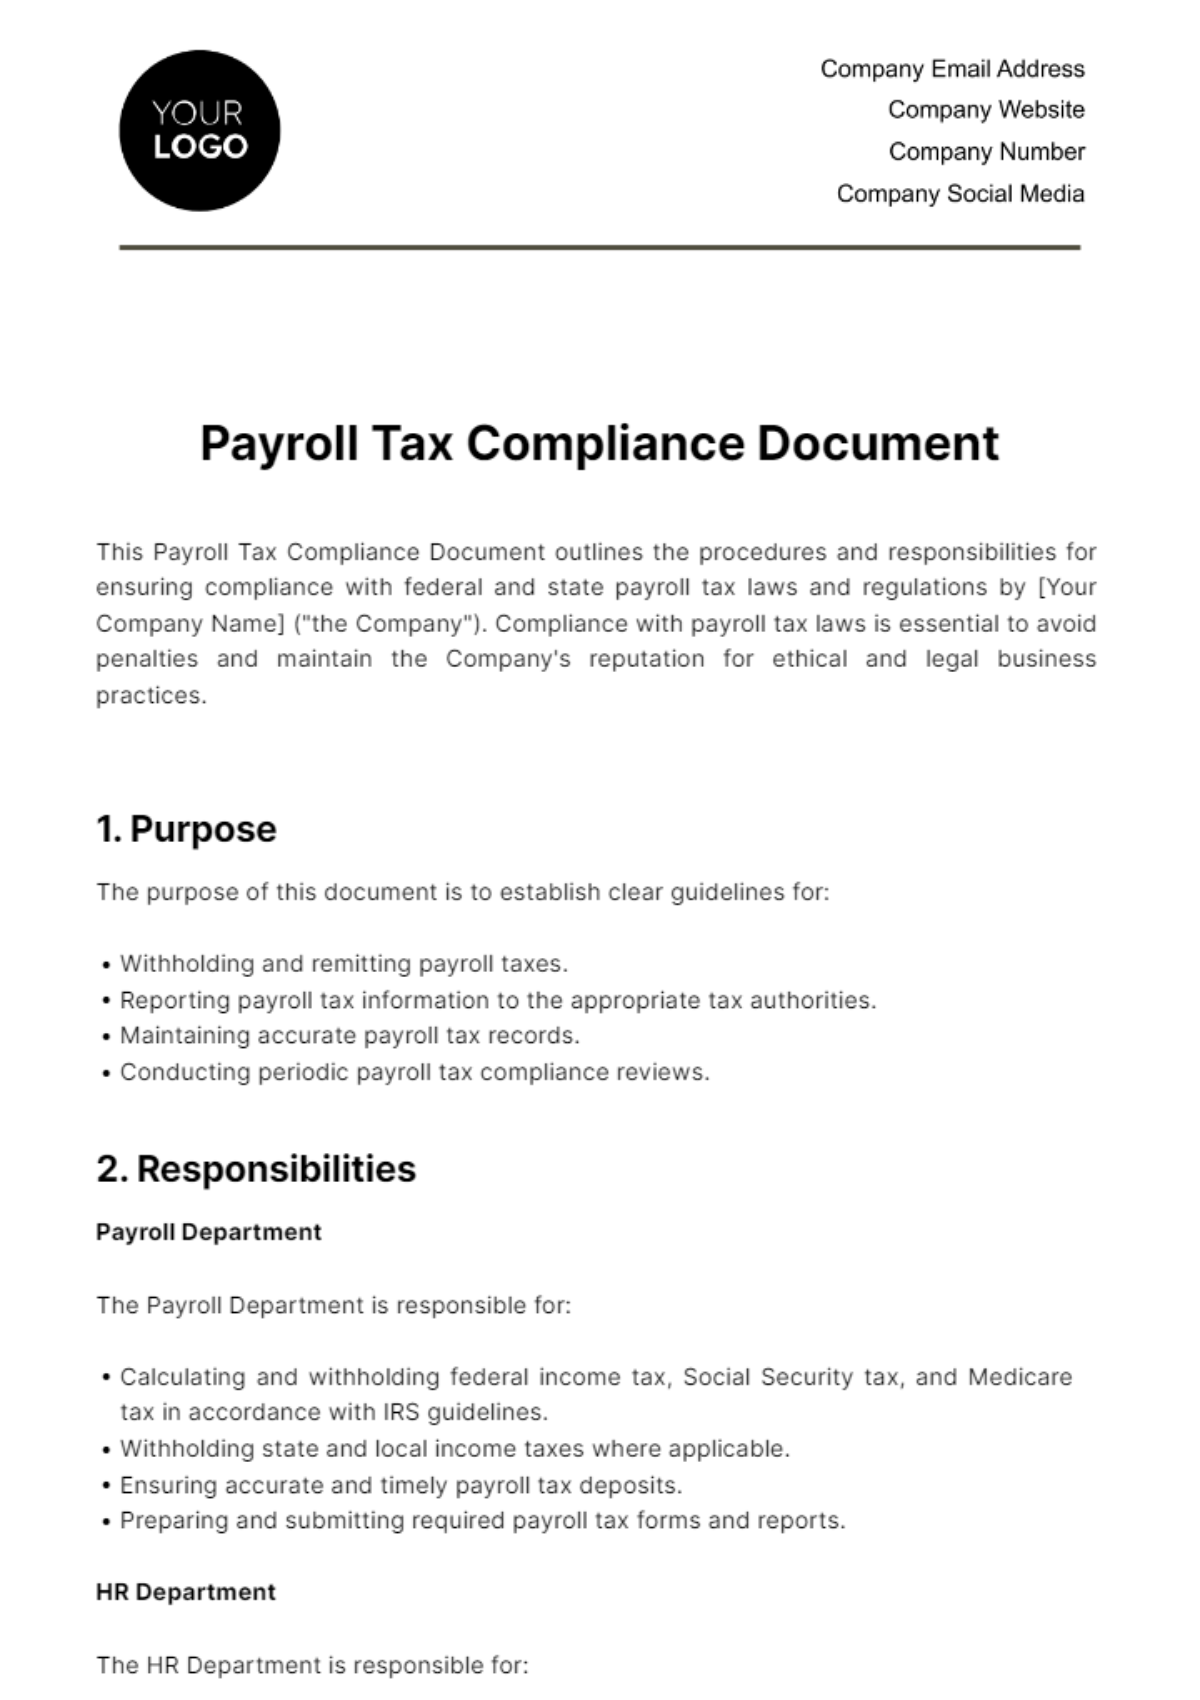 Free Payroll Tax Compliance Document HR Template